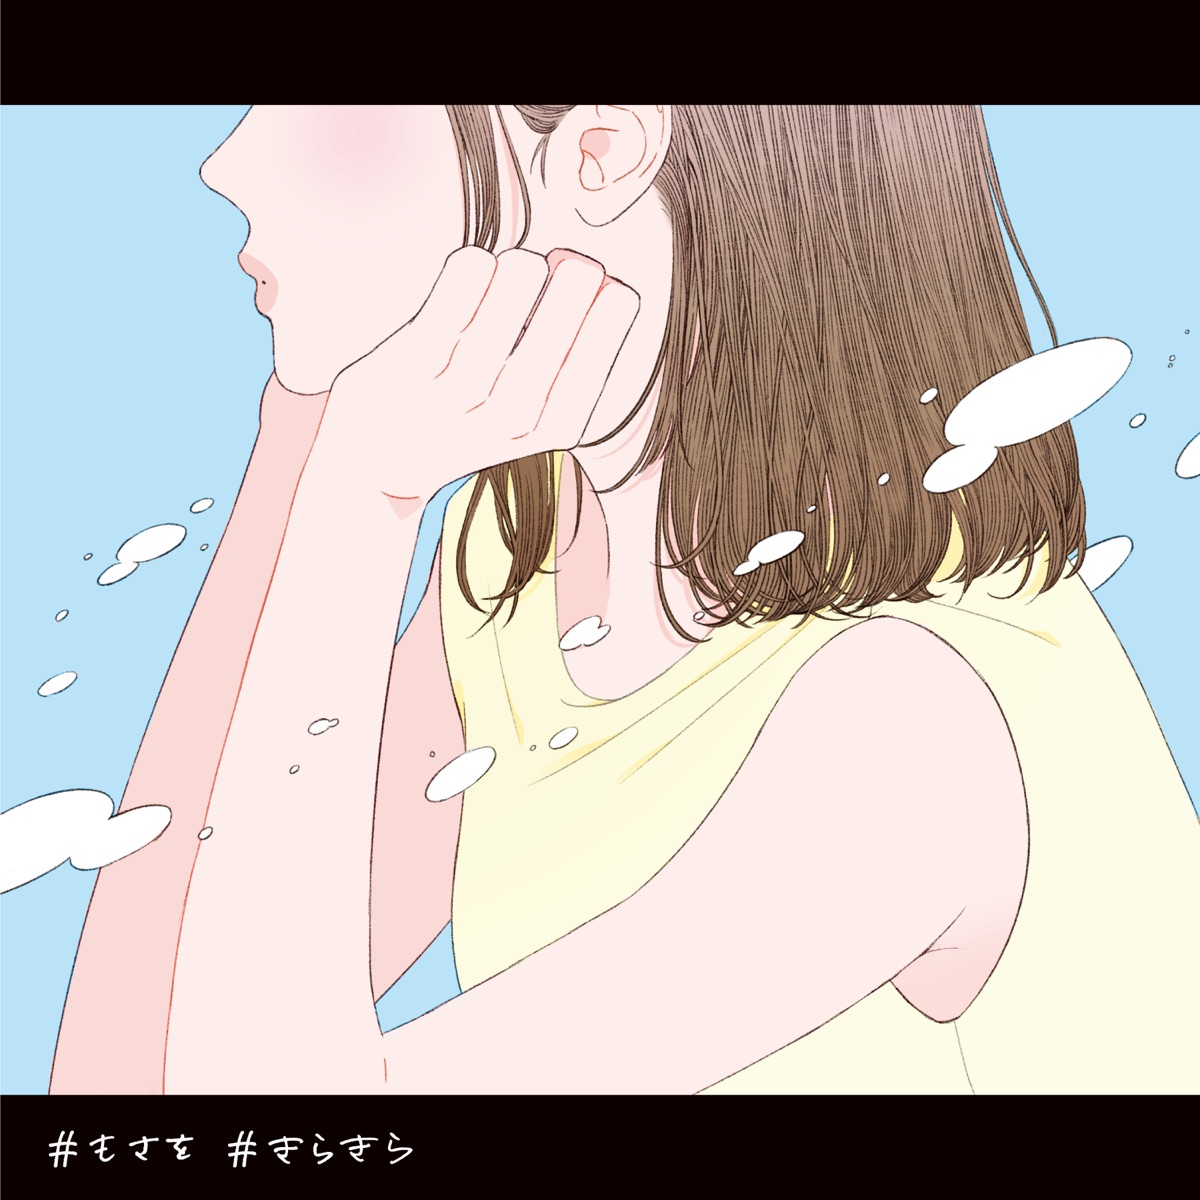 Cover art for『Mosawo - Kirakira』from the release『Kirakira』